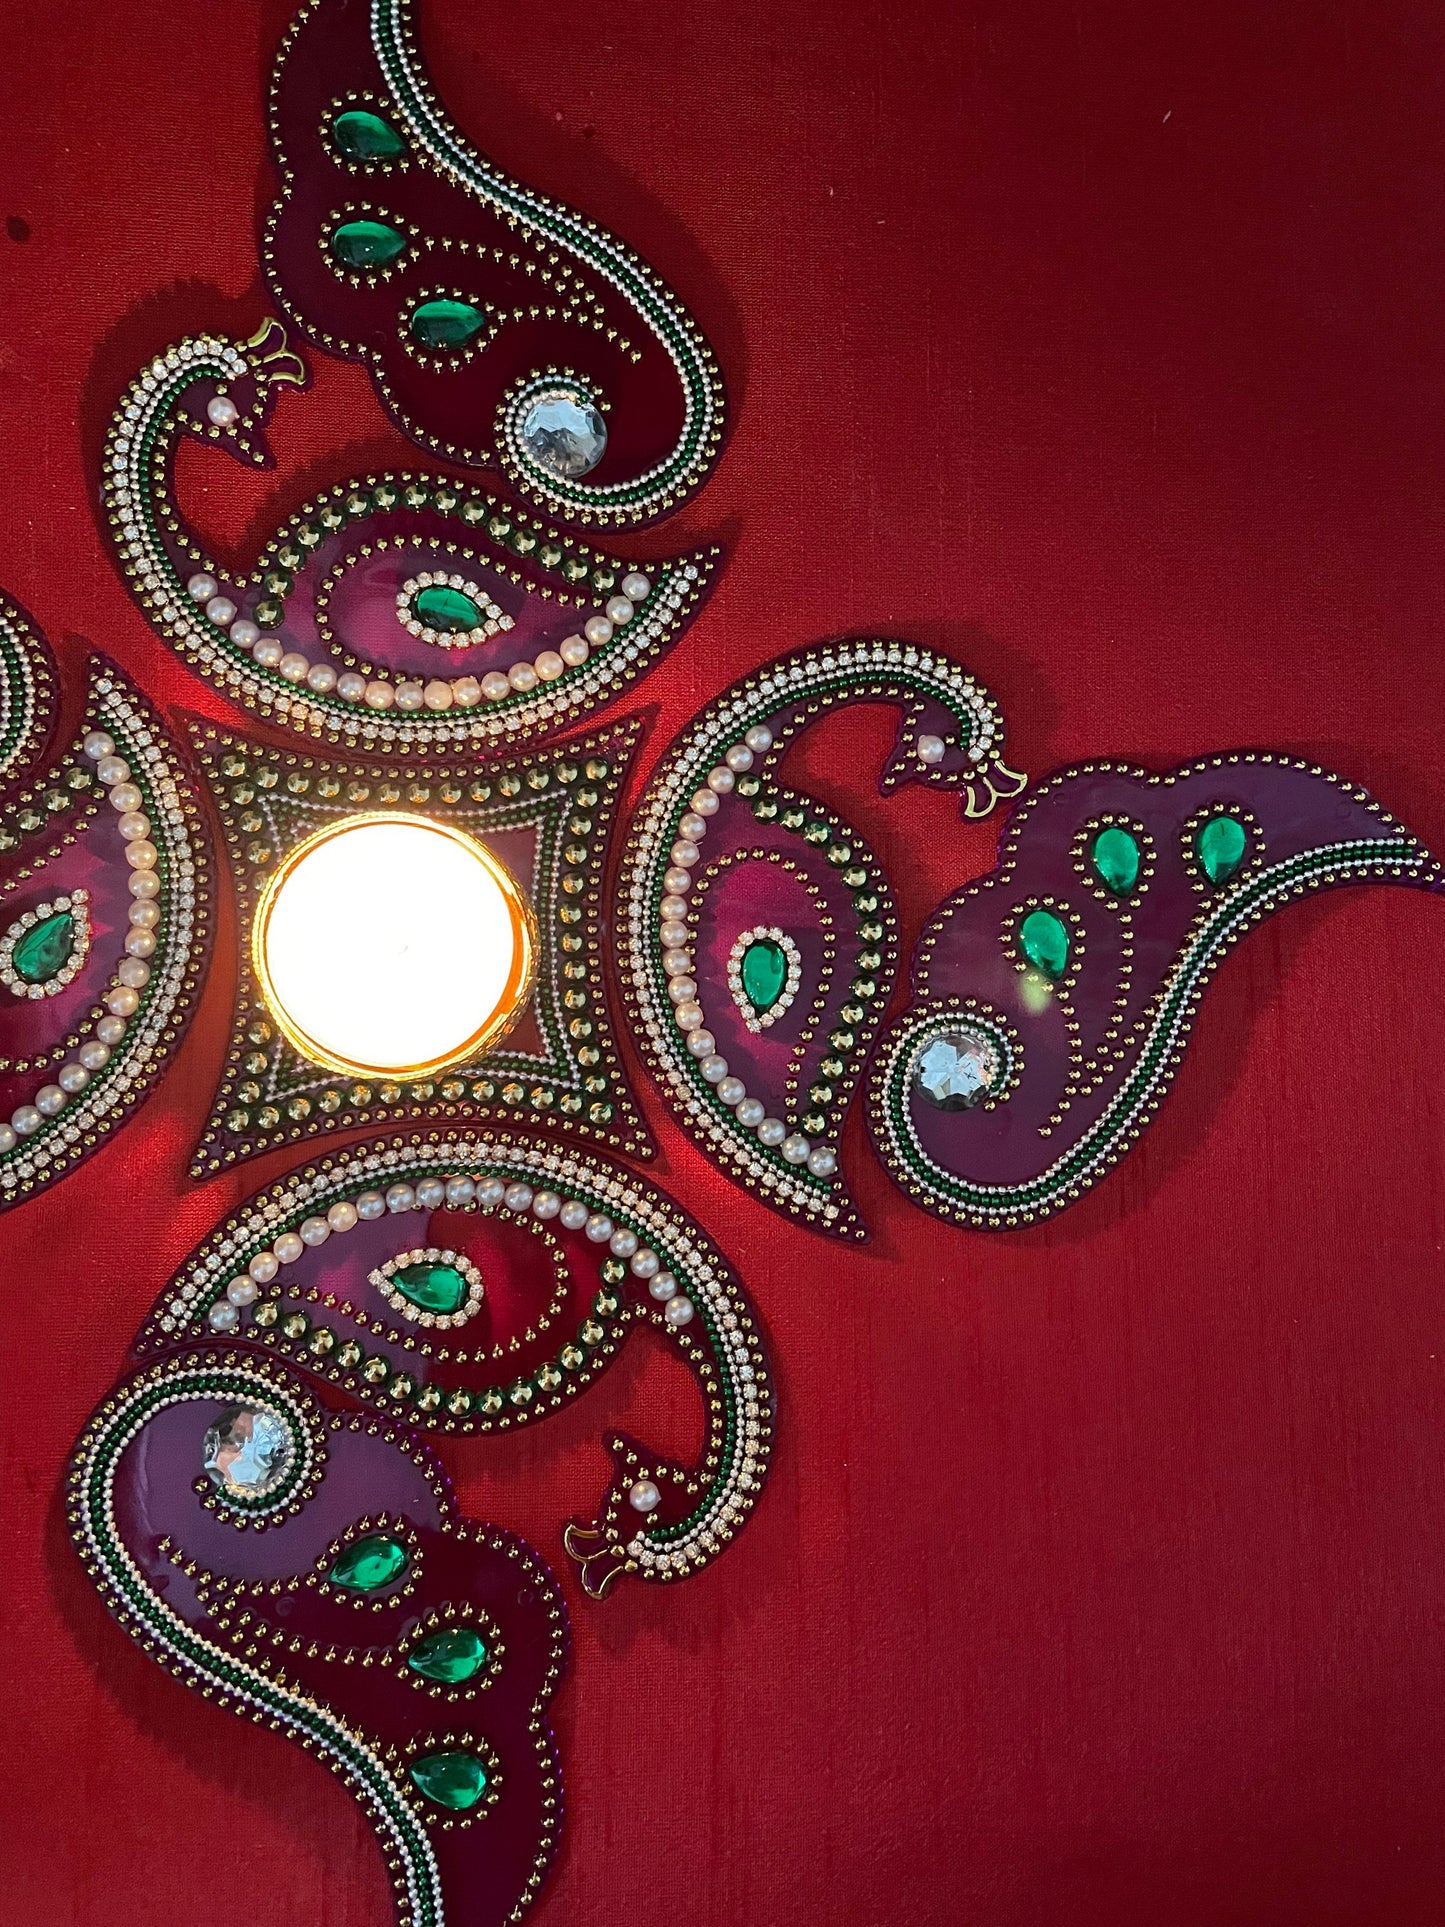 Nine Pieces Peacock Rangoli Re-Usable Floor Art Weddings New Home Navratri Durga Pooja Mor Design with Diva Vati